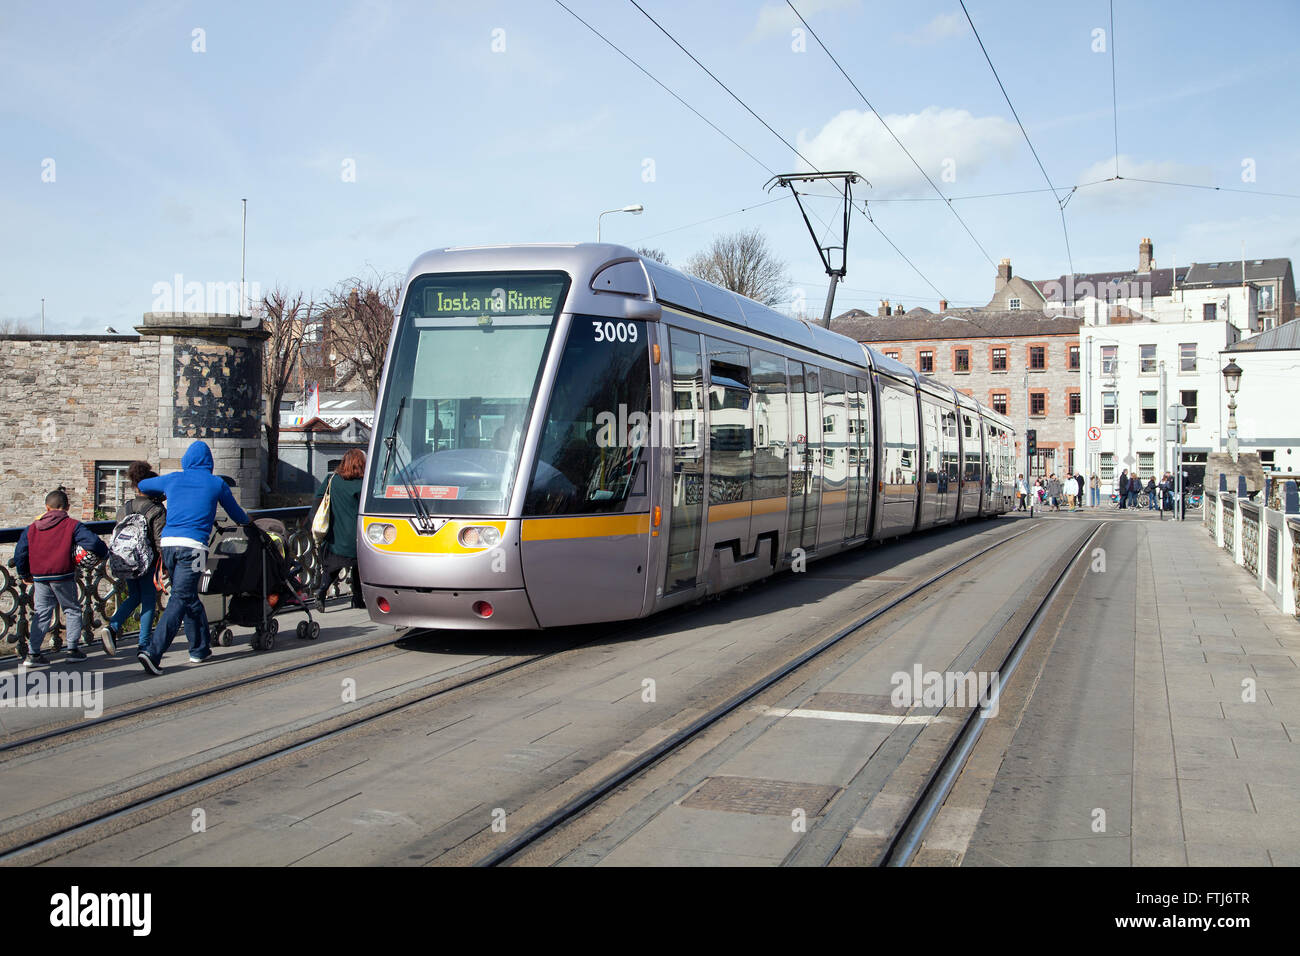 The Luas tram in Dublin city Ireland Stock Photo